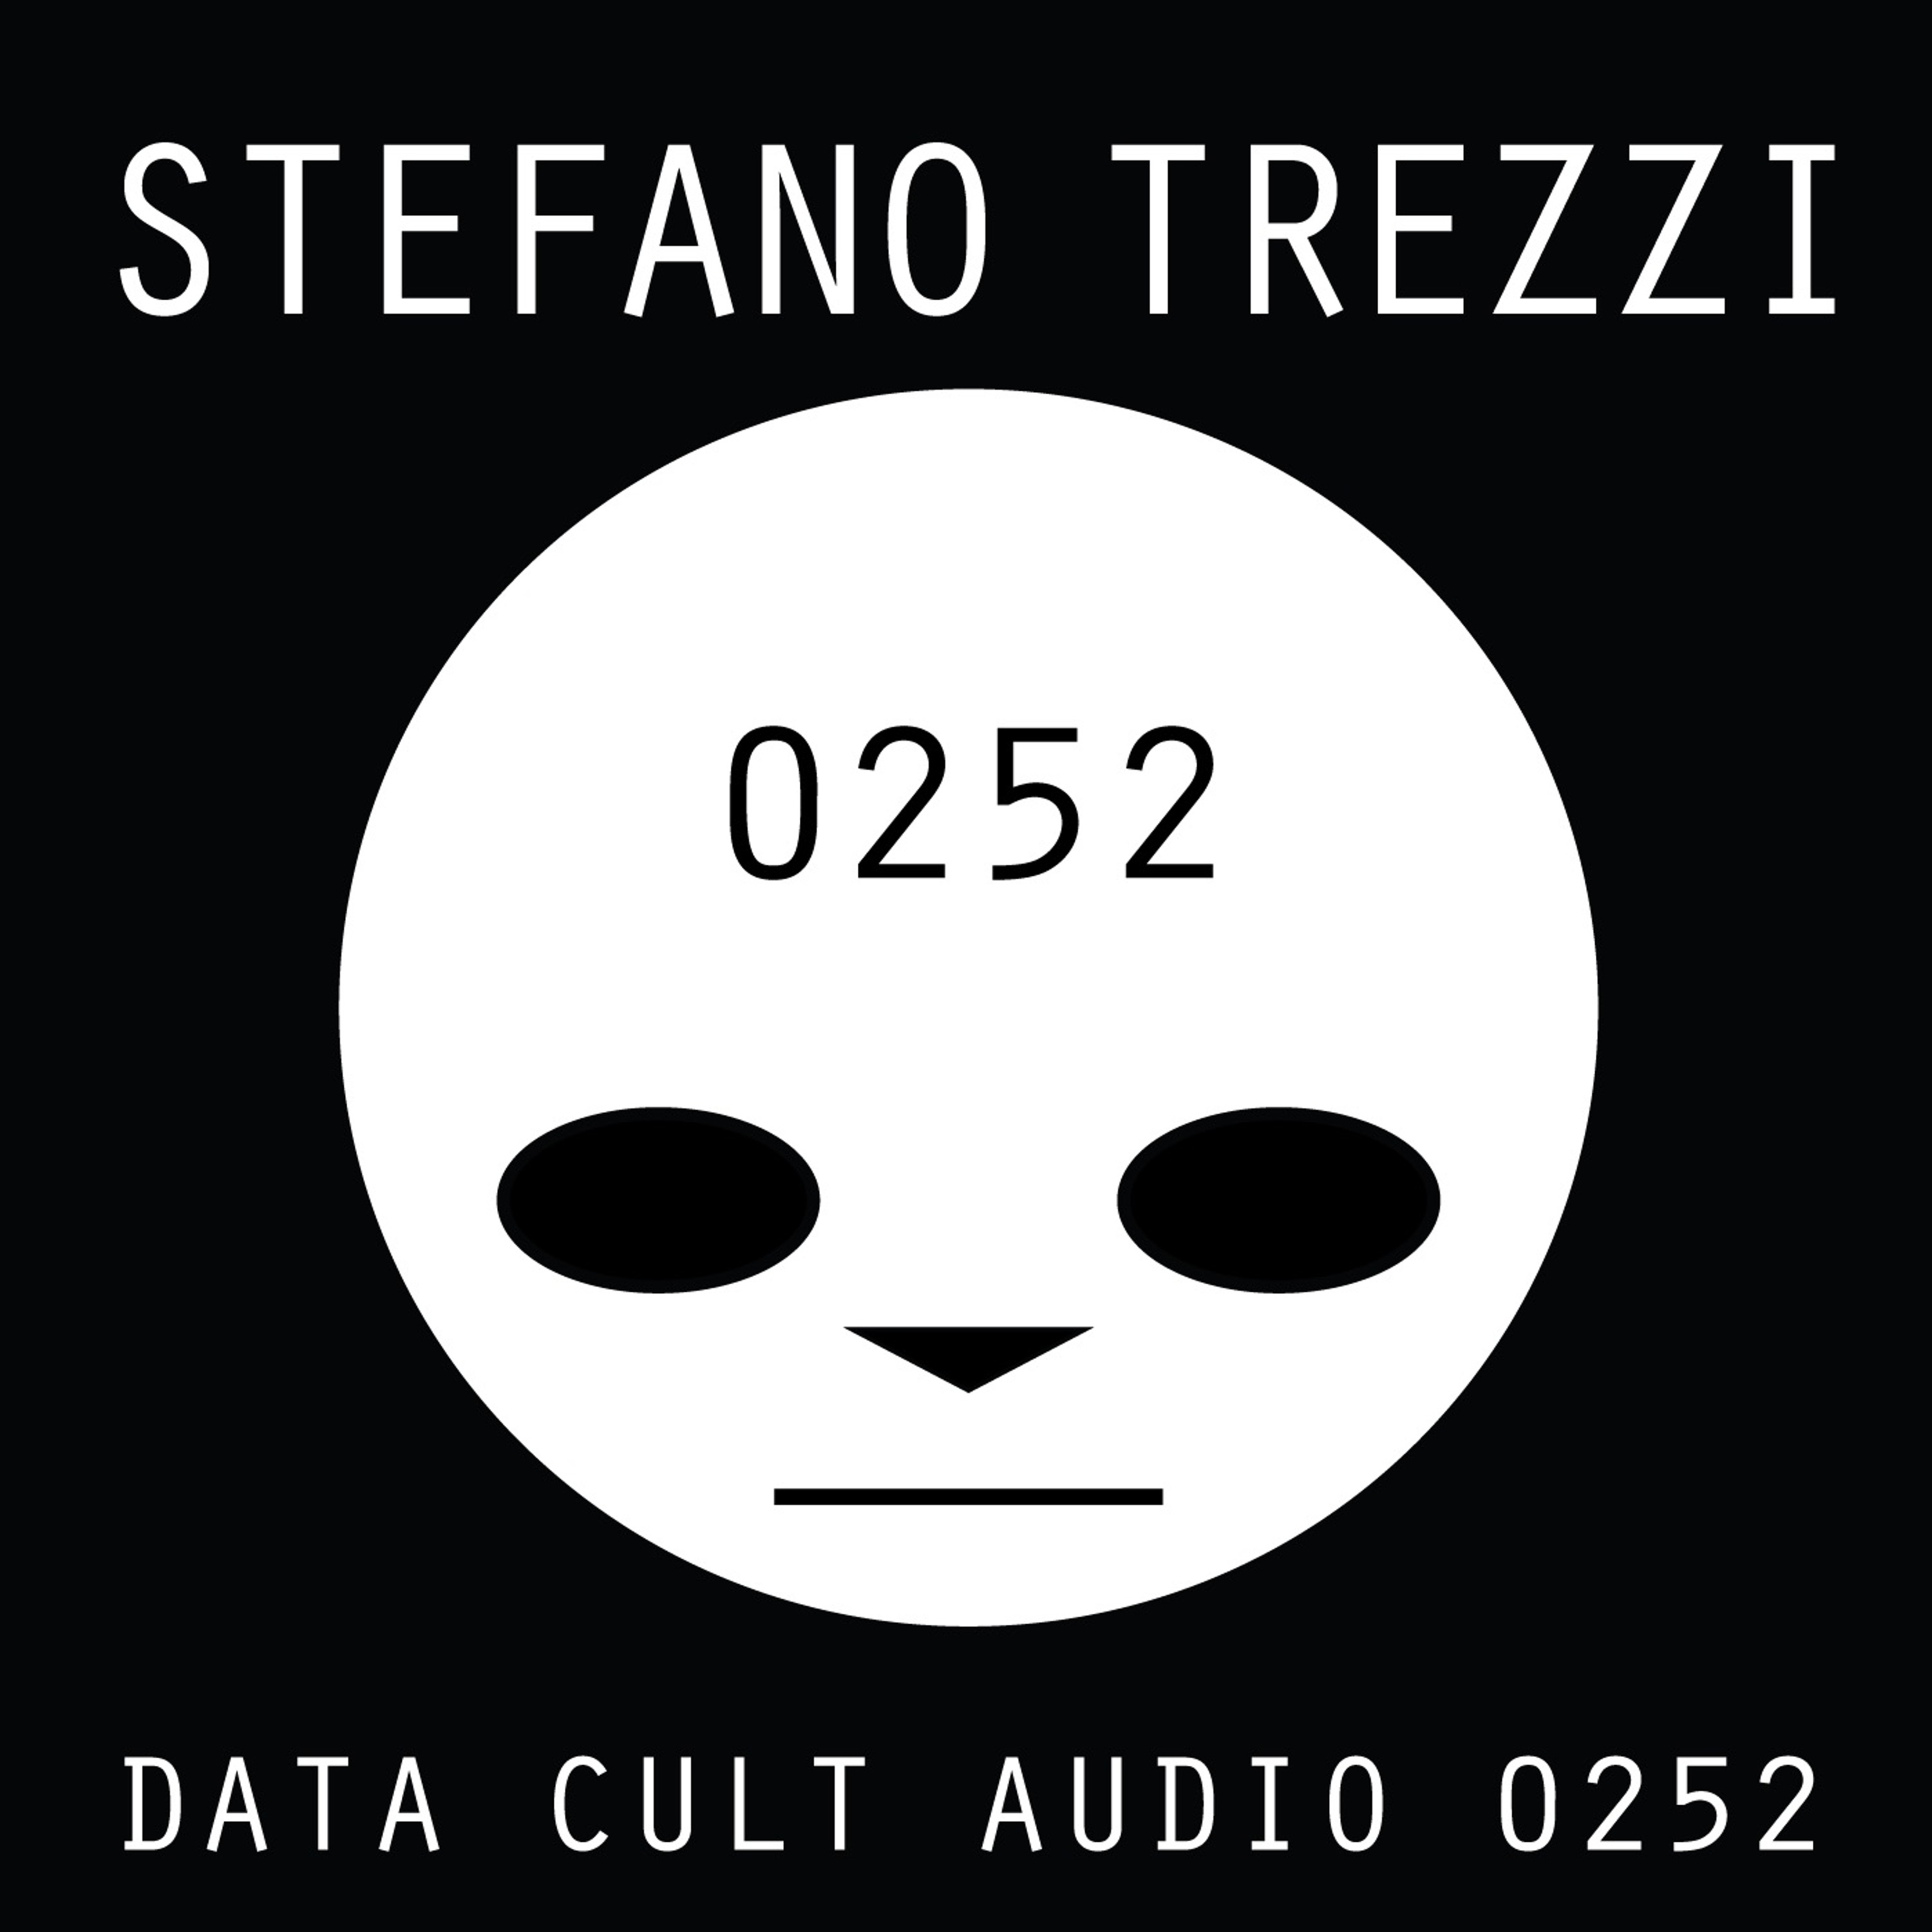 Data Cult Audio 0252 - Stefano Trezzi